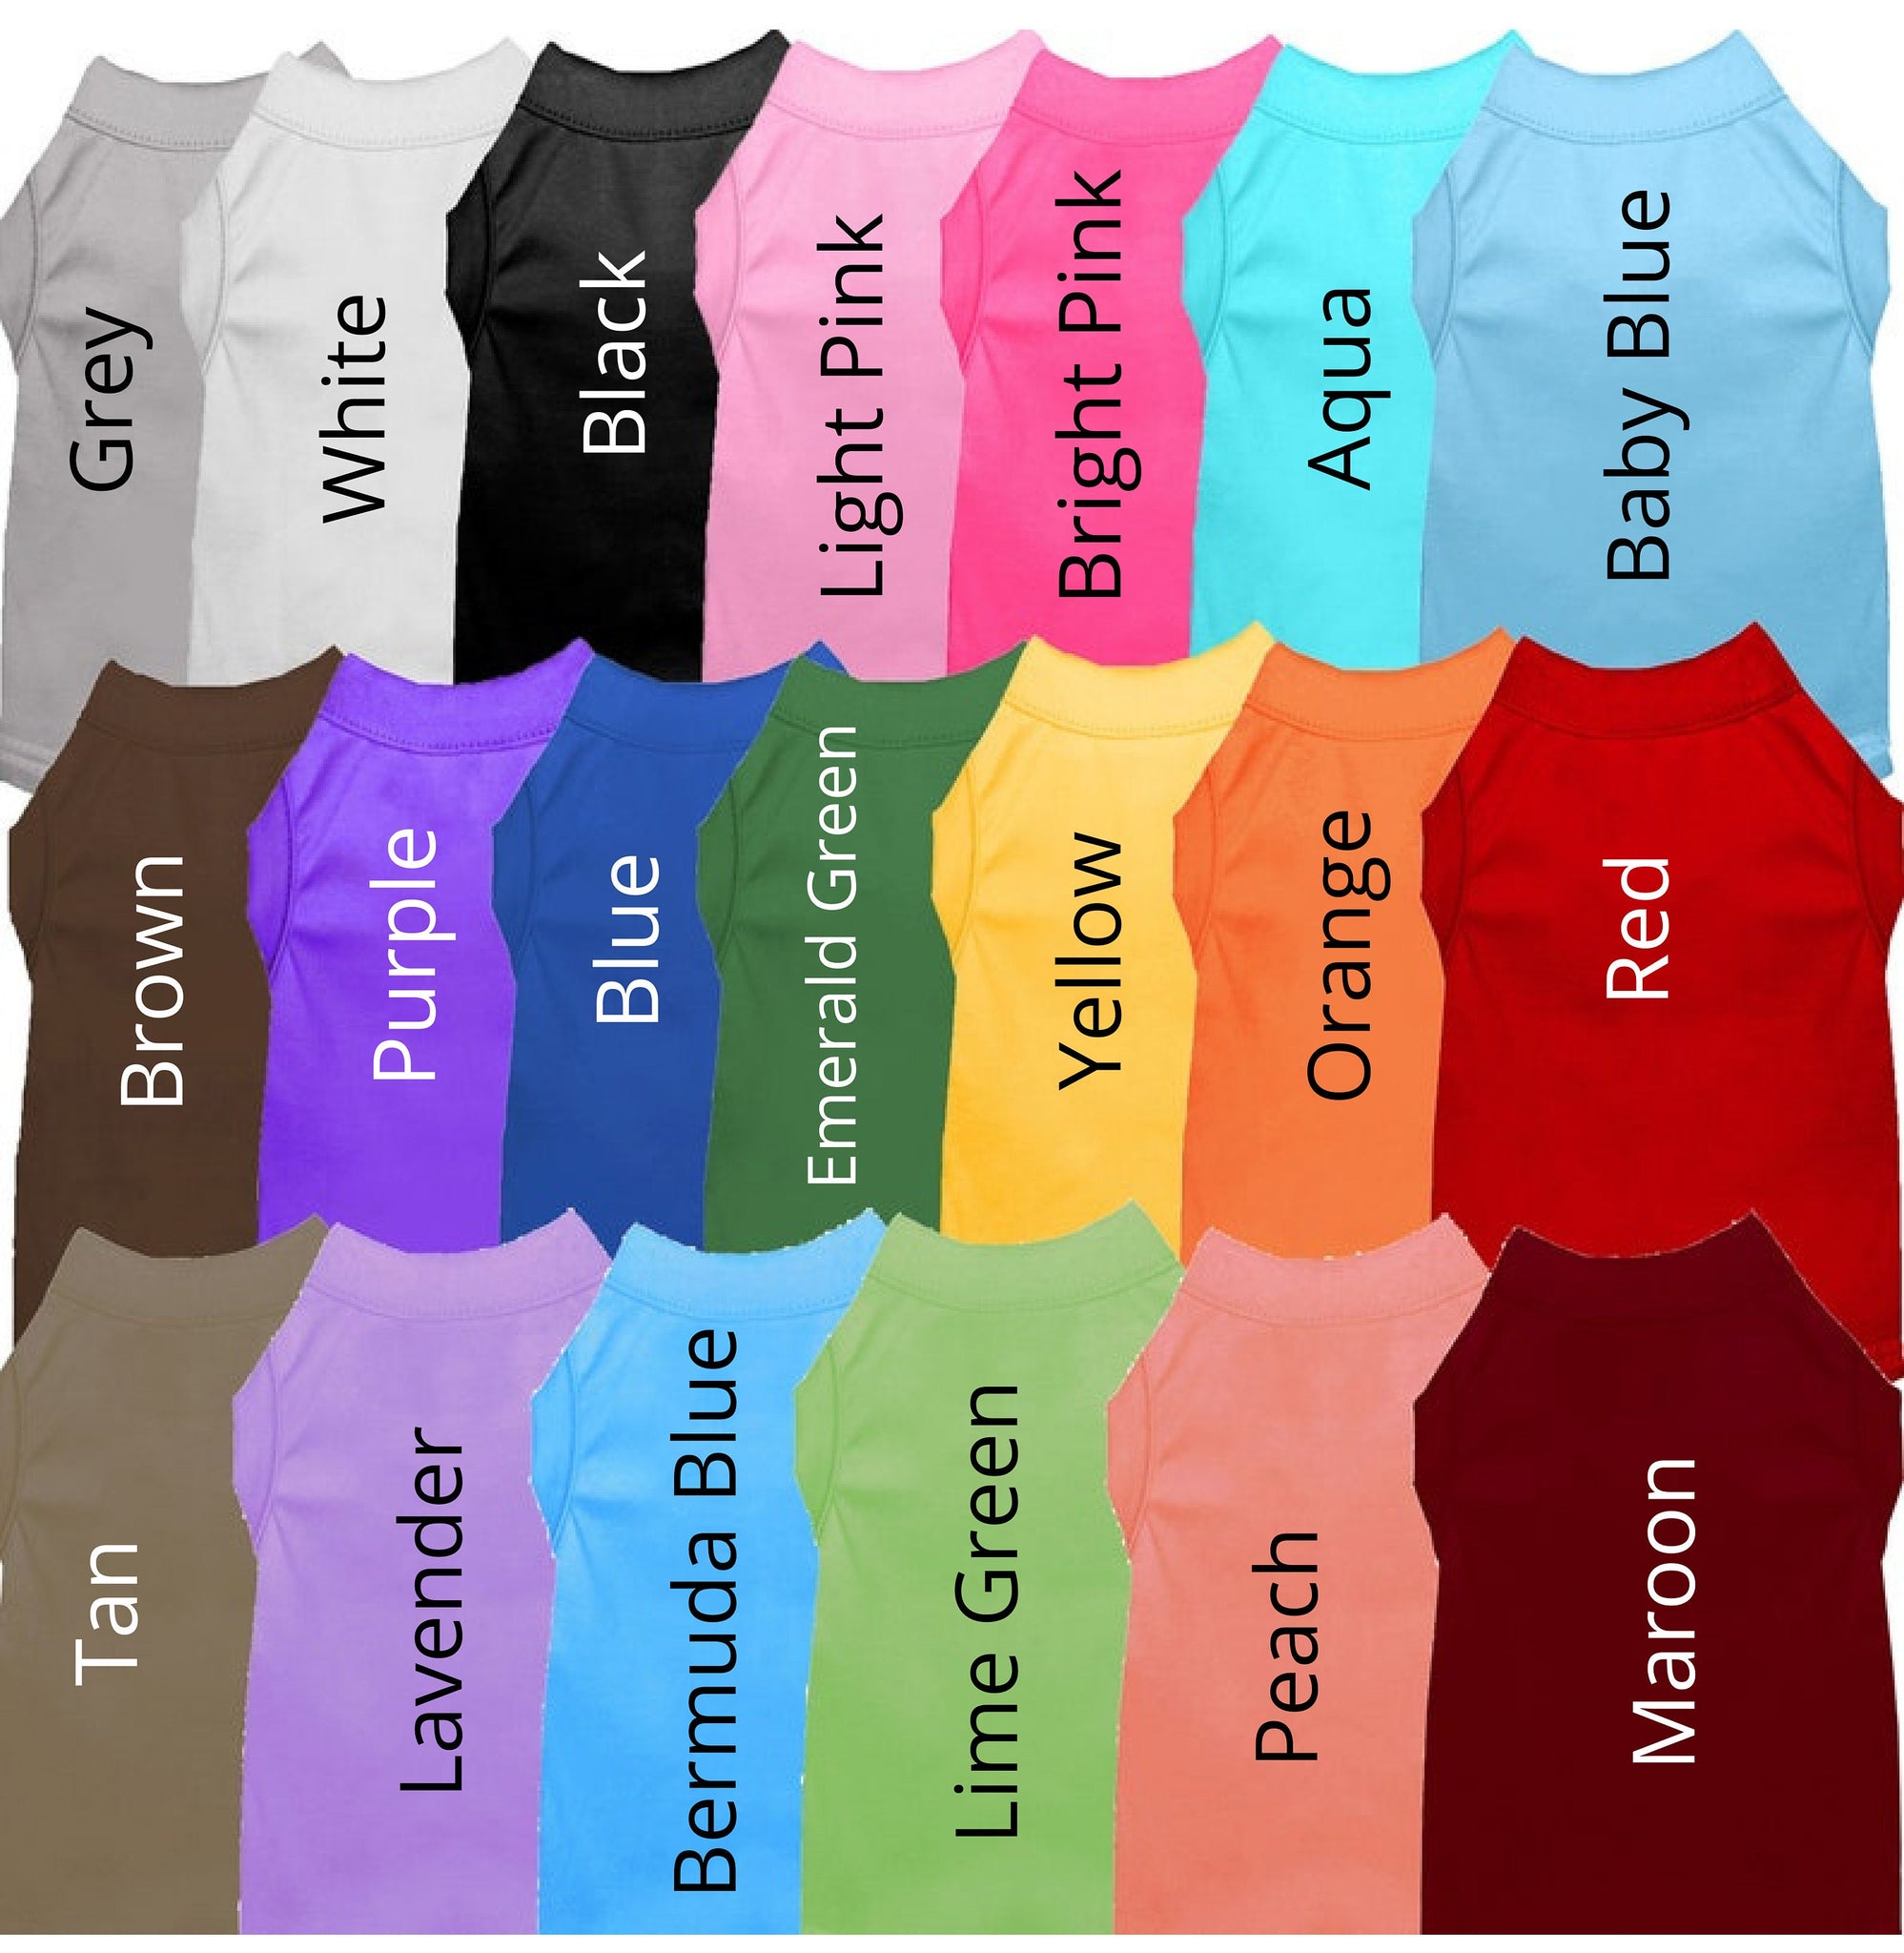 Pet Dog & Cat Screen Printed Shirt for Medium to Large Pets (Sizes 2XL-6XL), "Minnesota Bright Tie Dye"